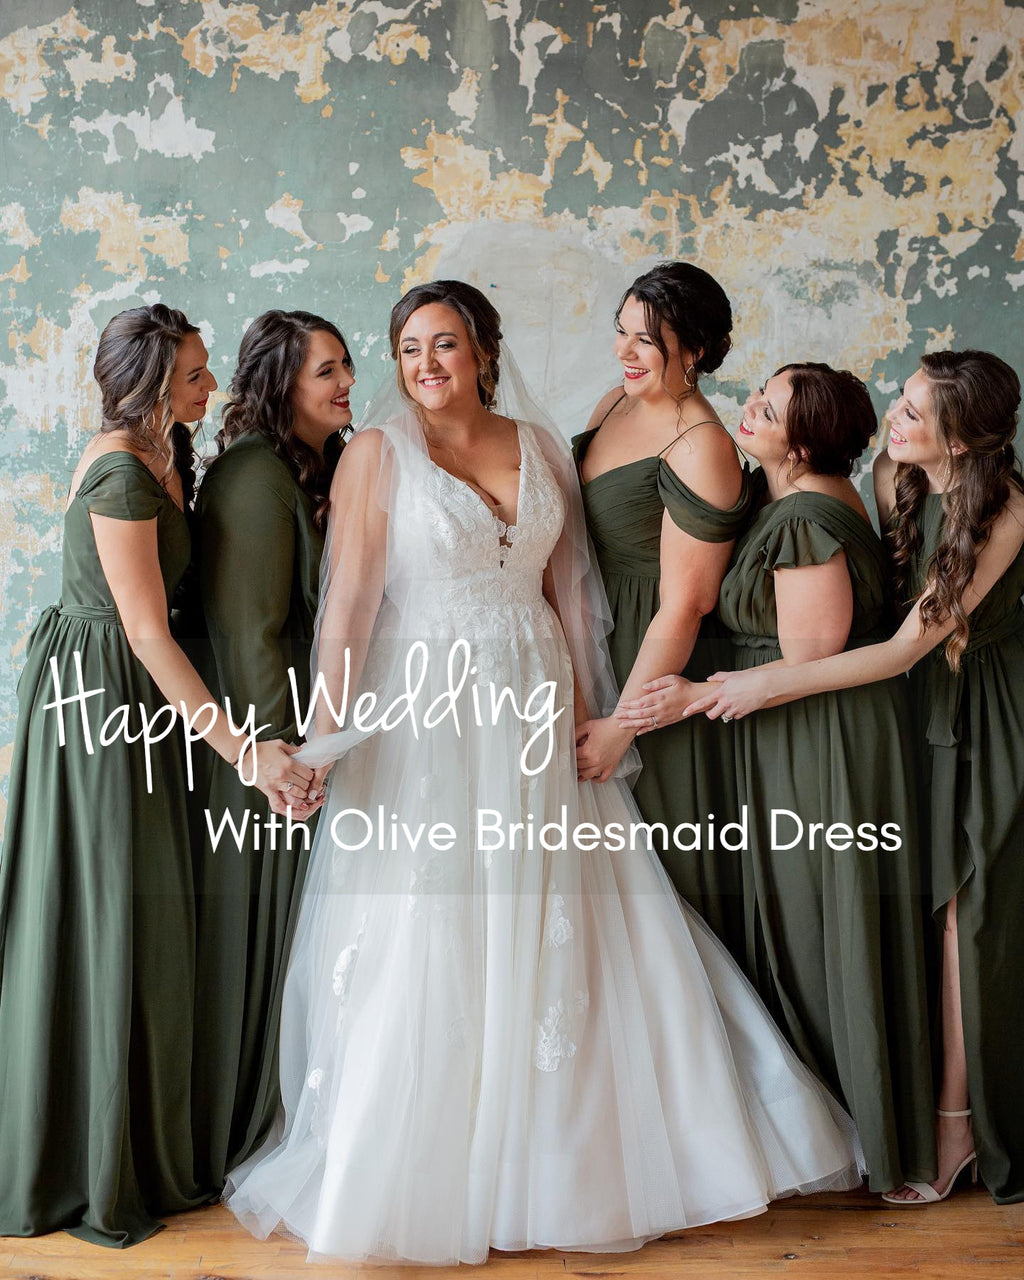 Olive Bridesmaid Dress